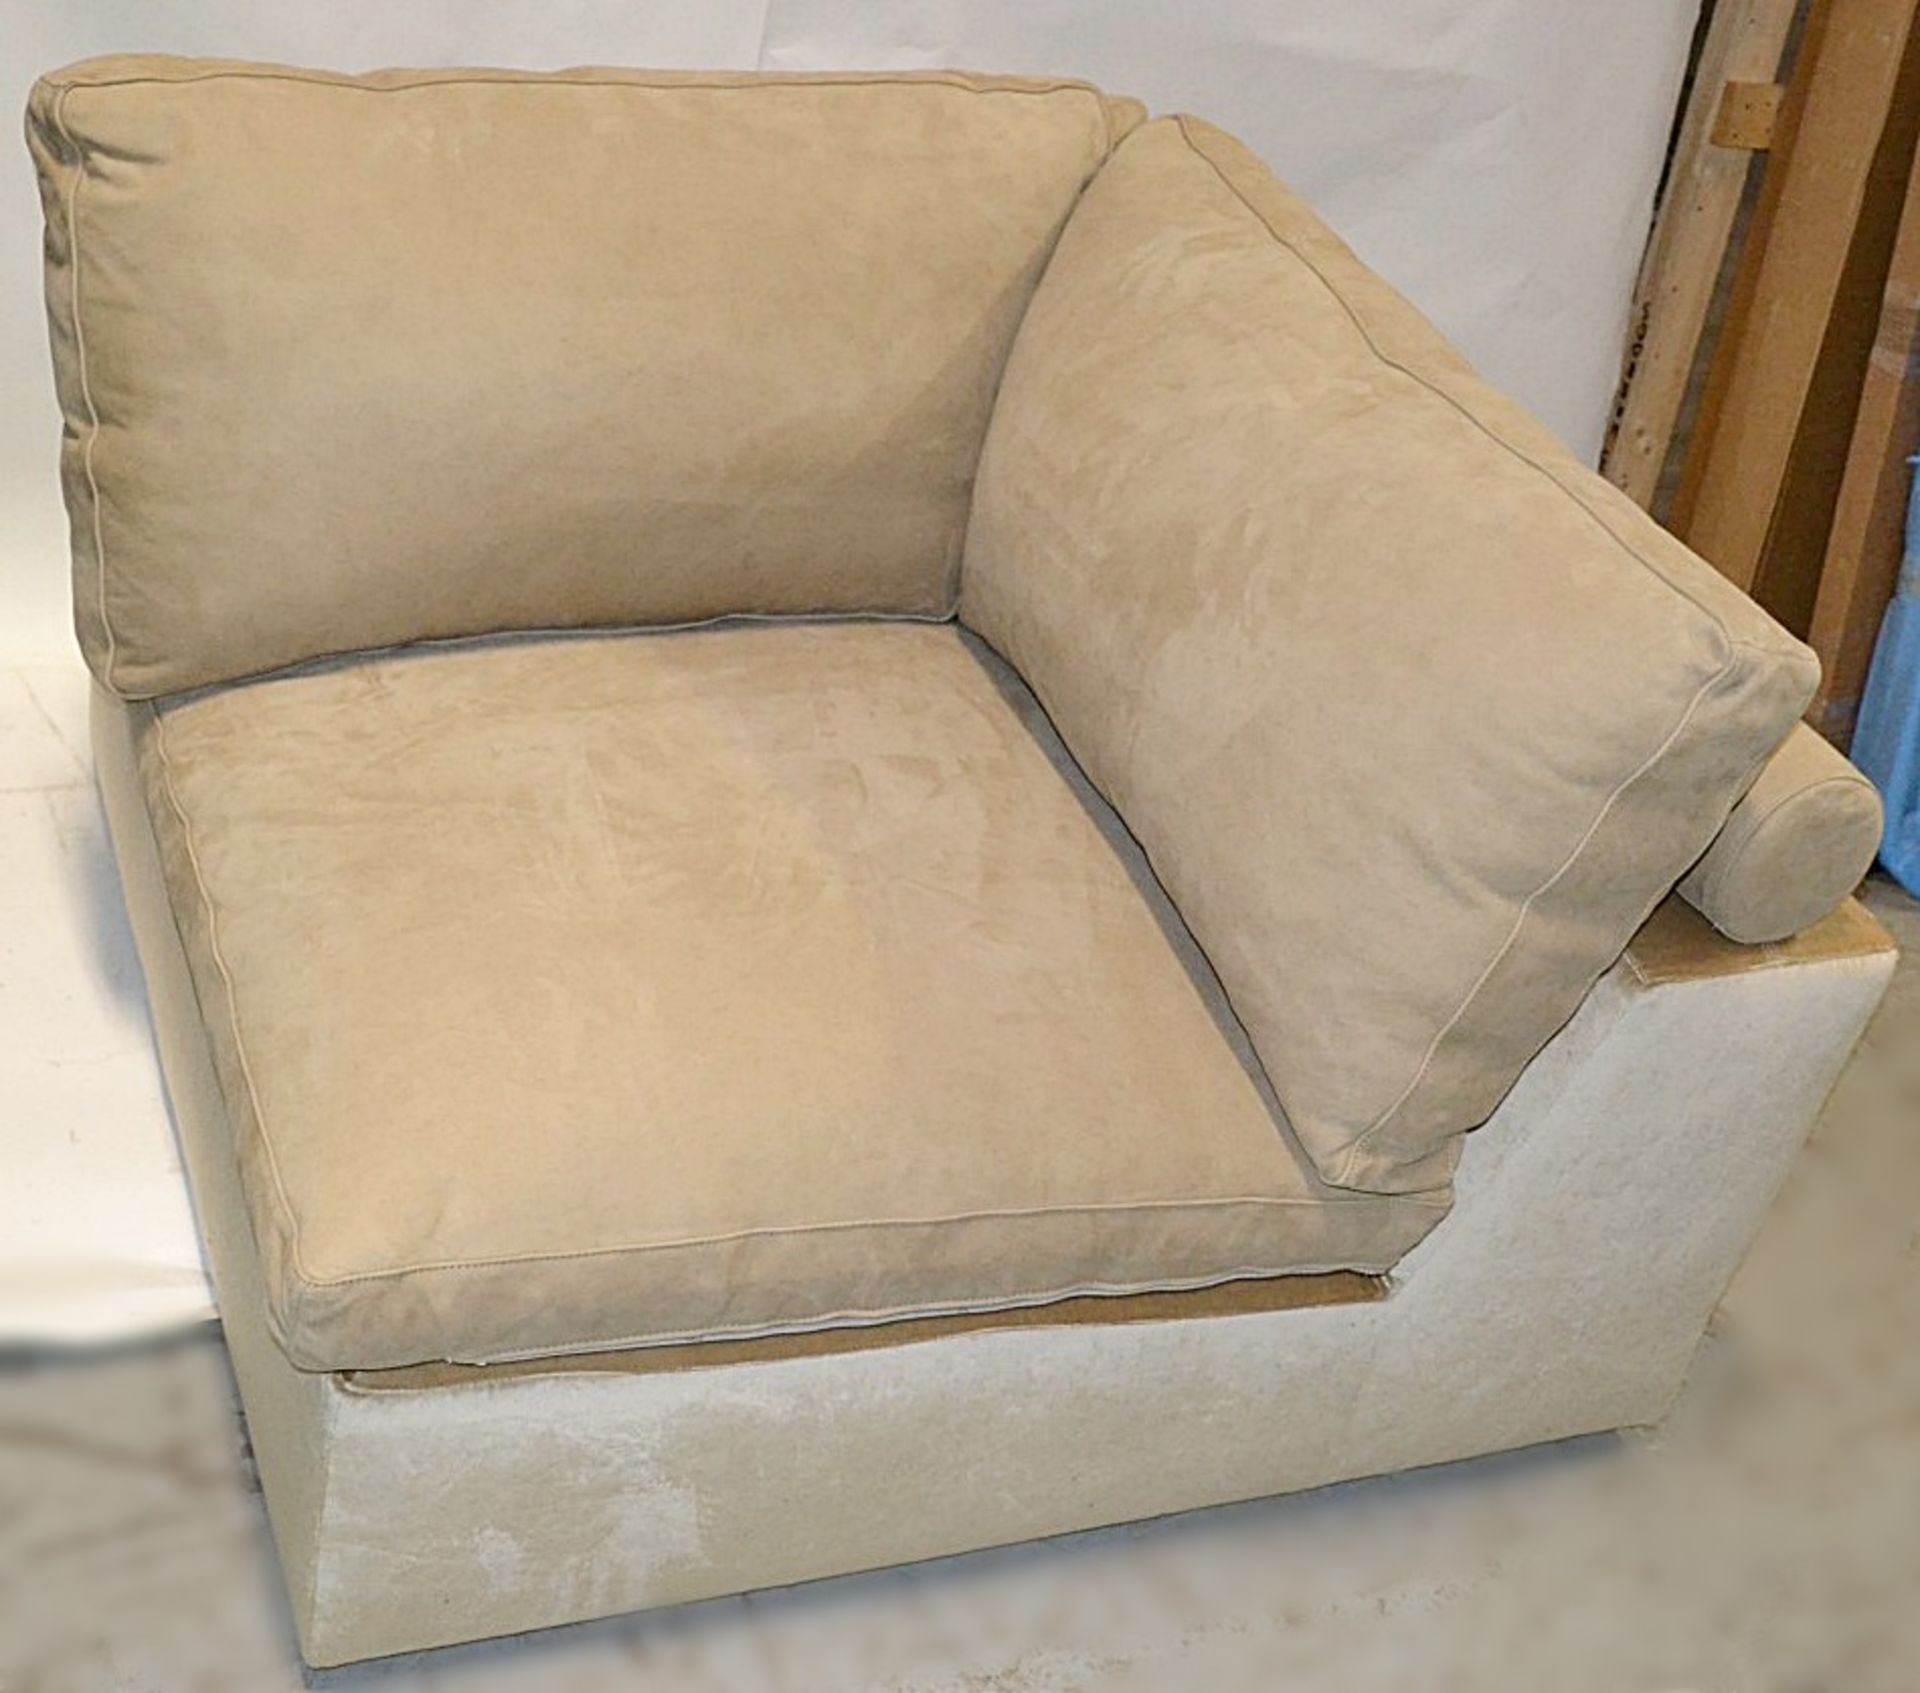 1 x GIORGIO Lifetime "Sayonara" Sectional Sofa Module (Sx132) - Upholstered In Camel-coloured Nubuck - Image 2 of 10